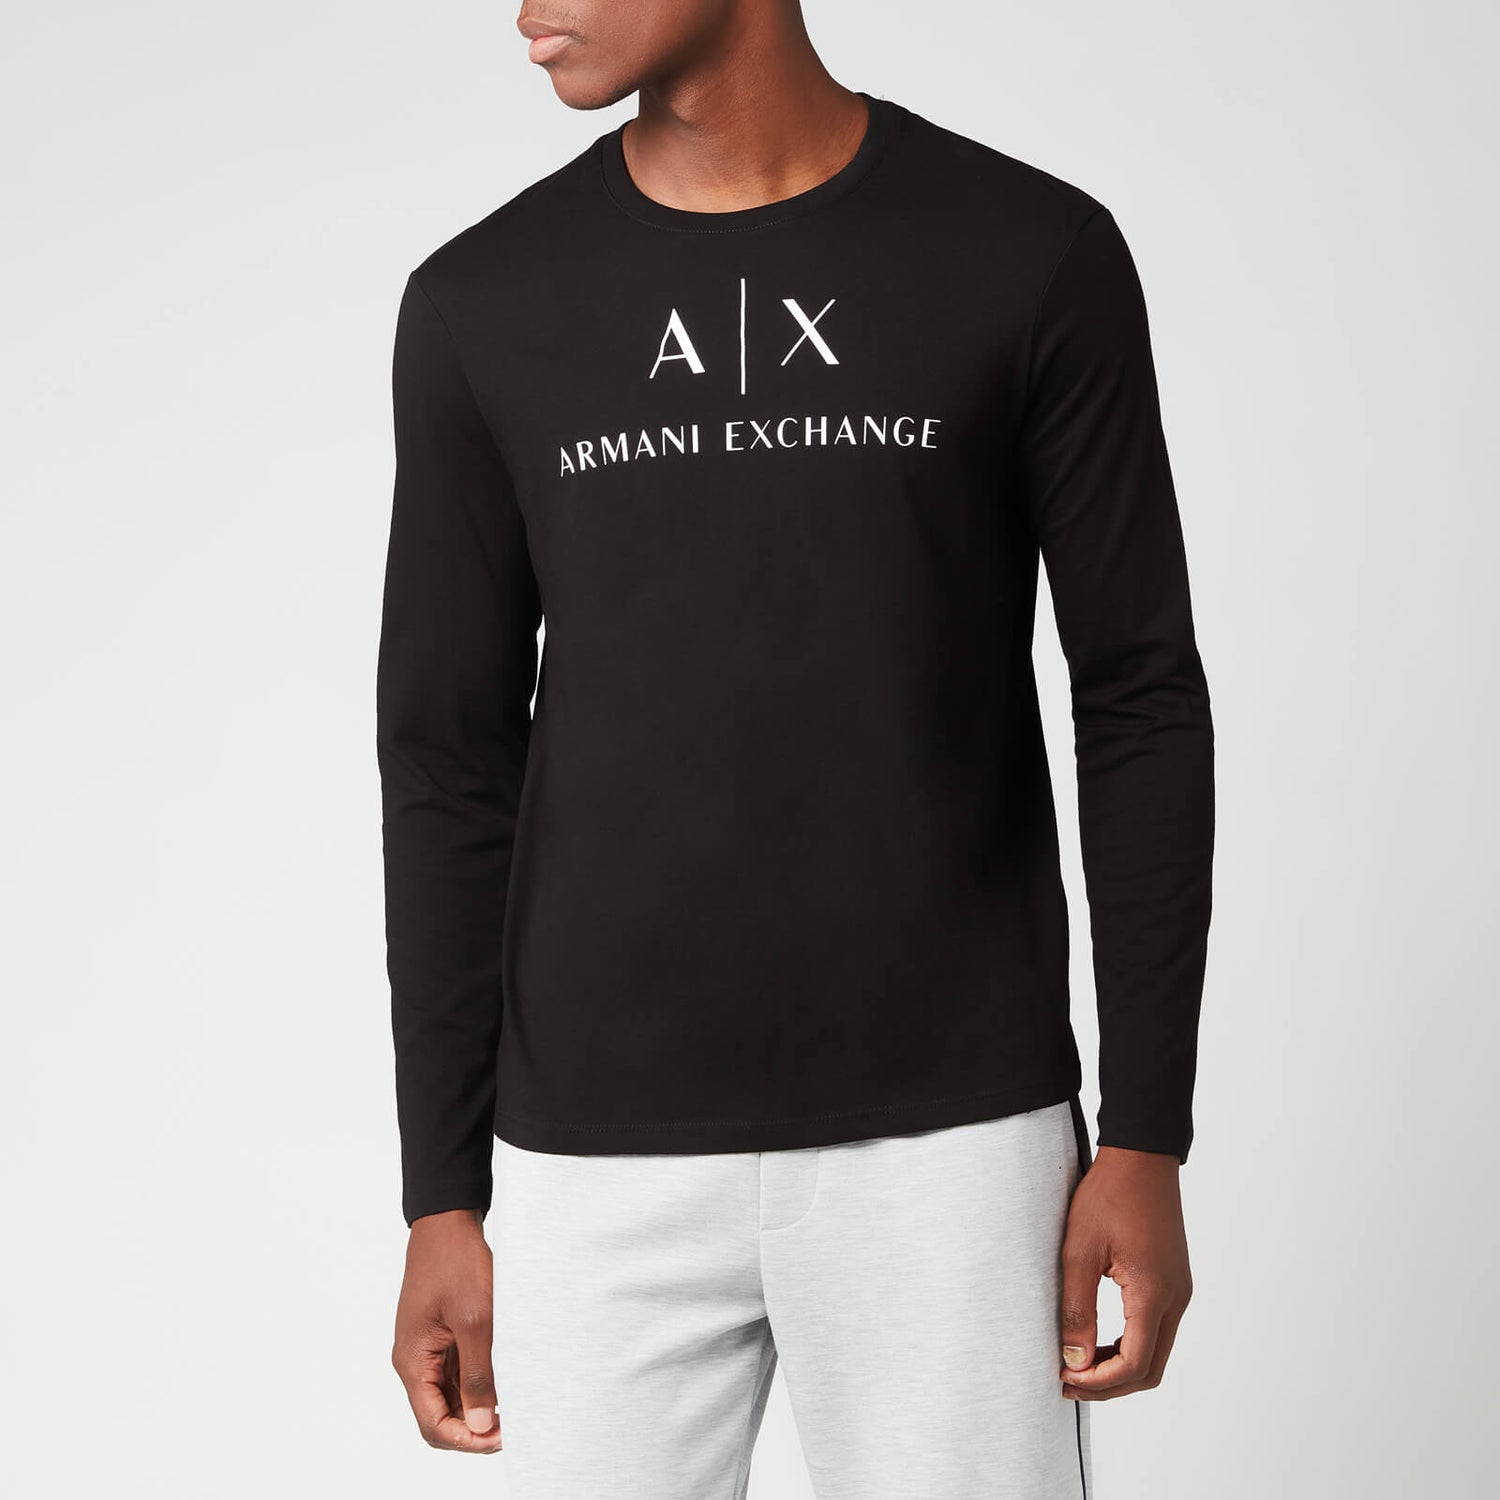 Armani Exchange Men's AX Logo Long Sleeved T-Shirt - Black - S